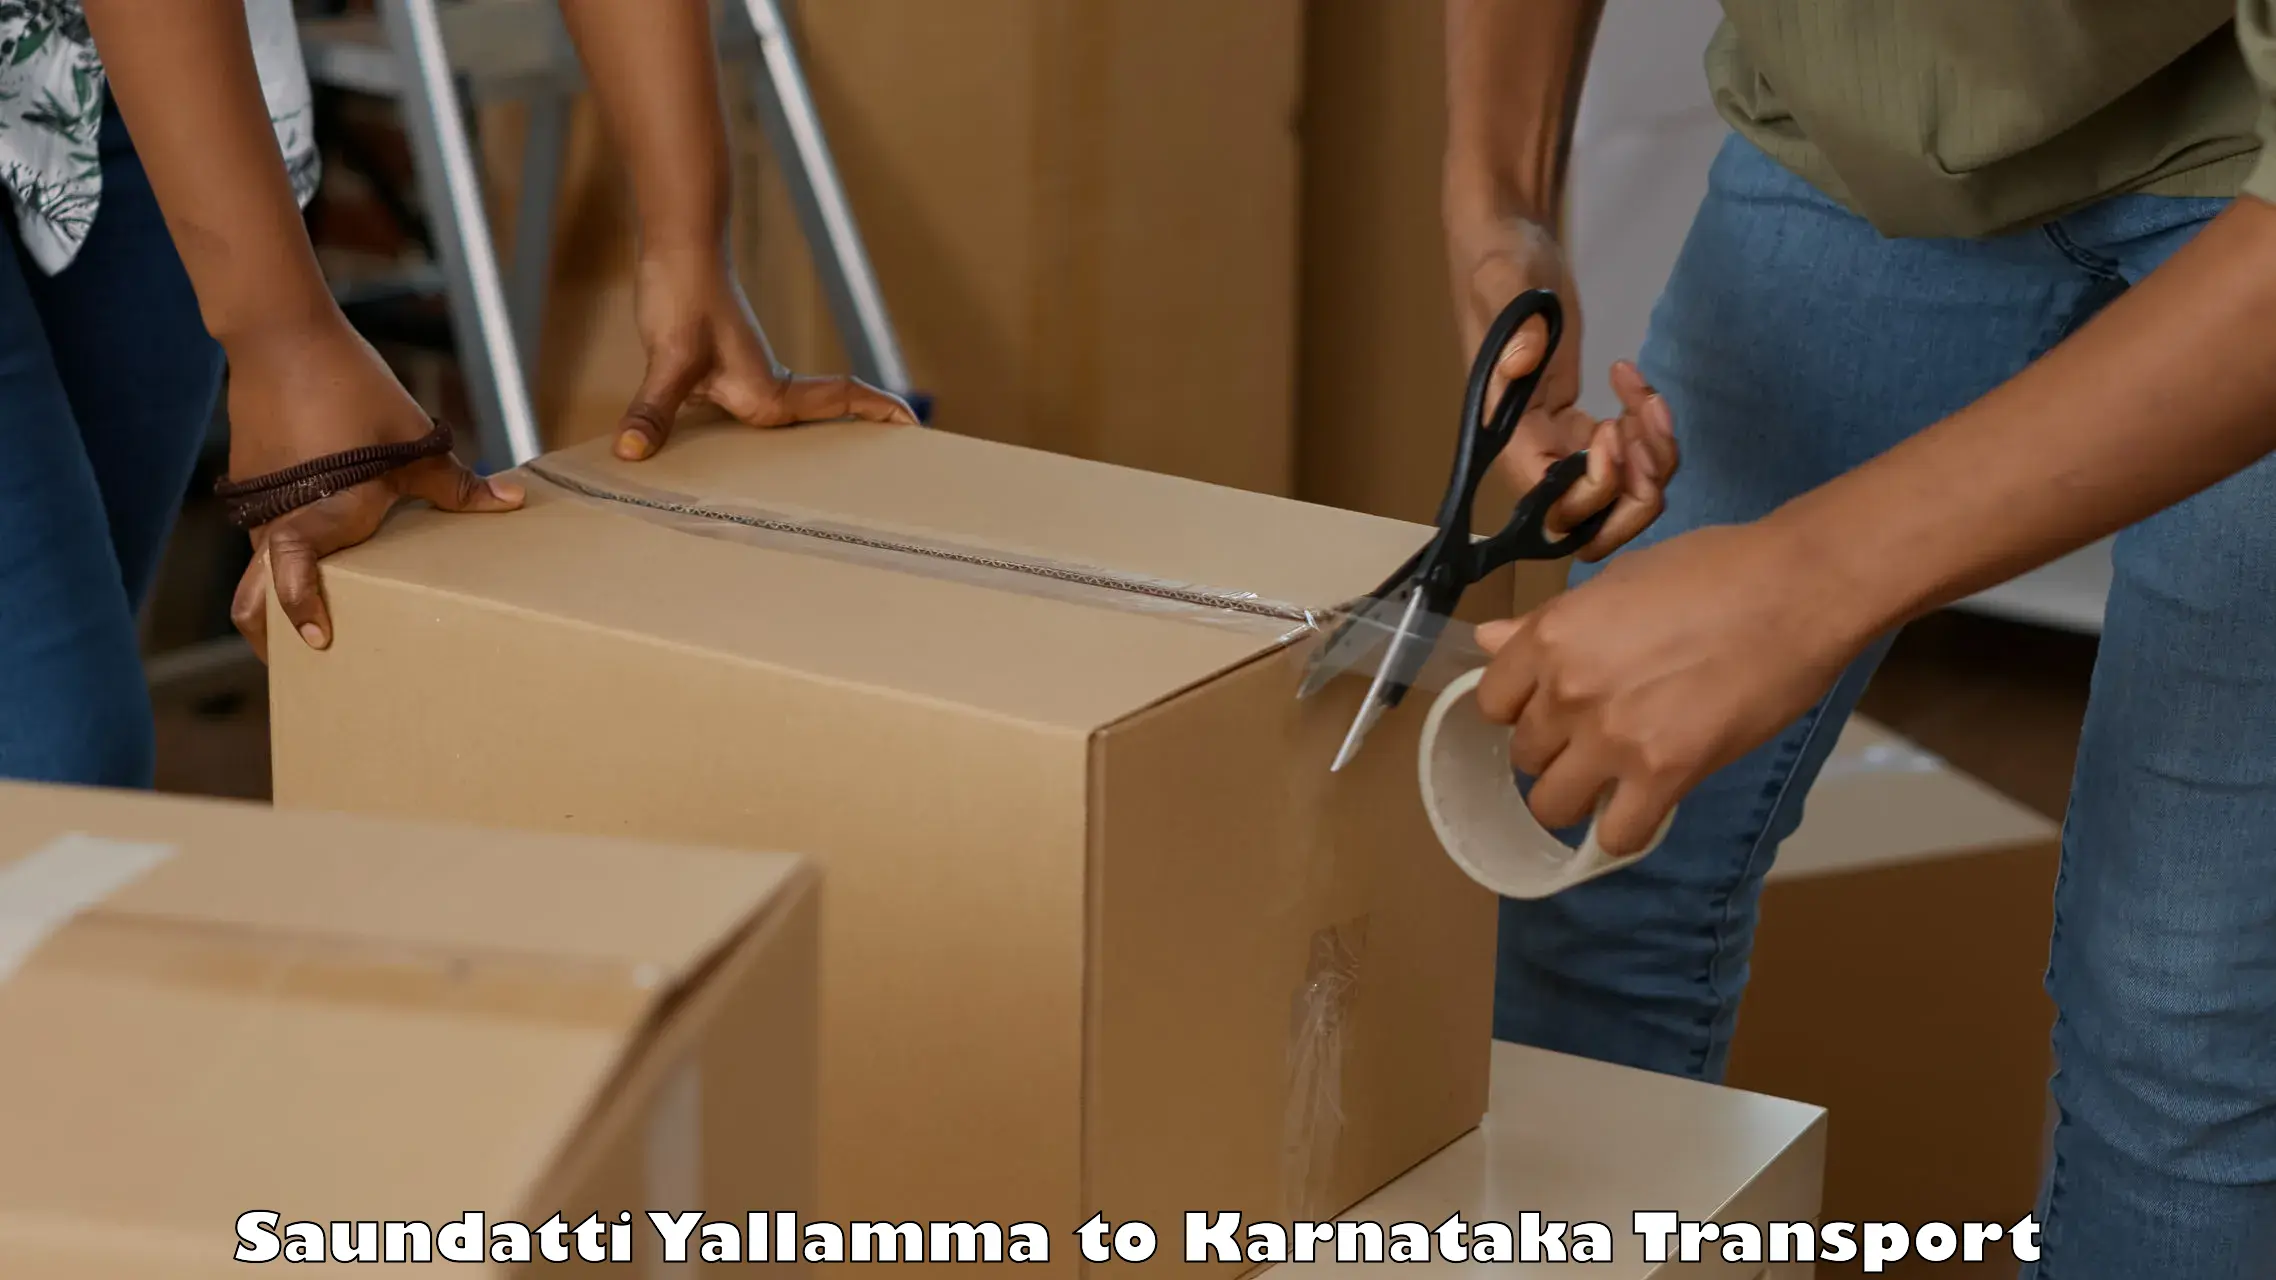 Truck transport companies in India Saundatti Yallamma to Salahalli